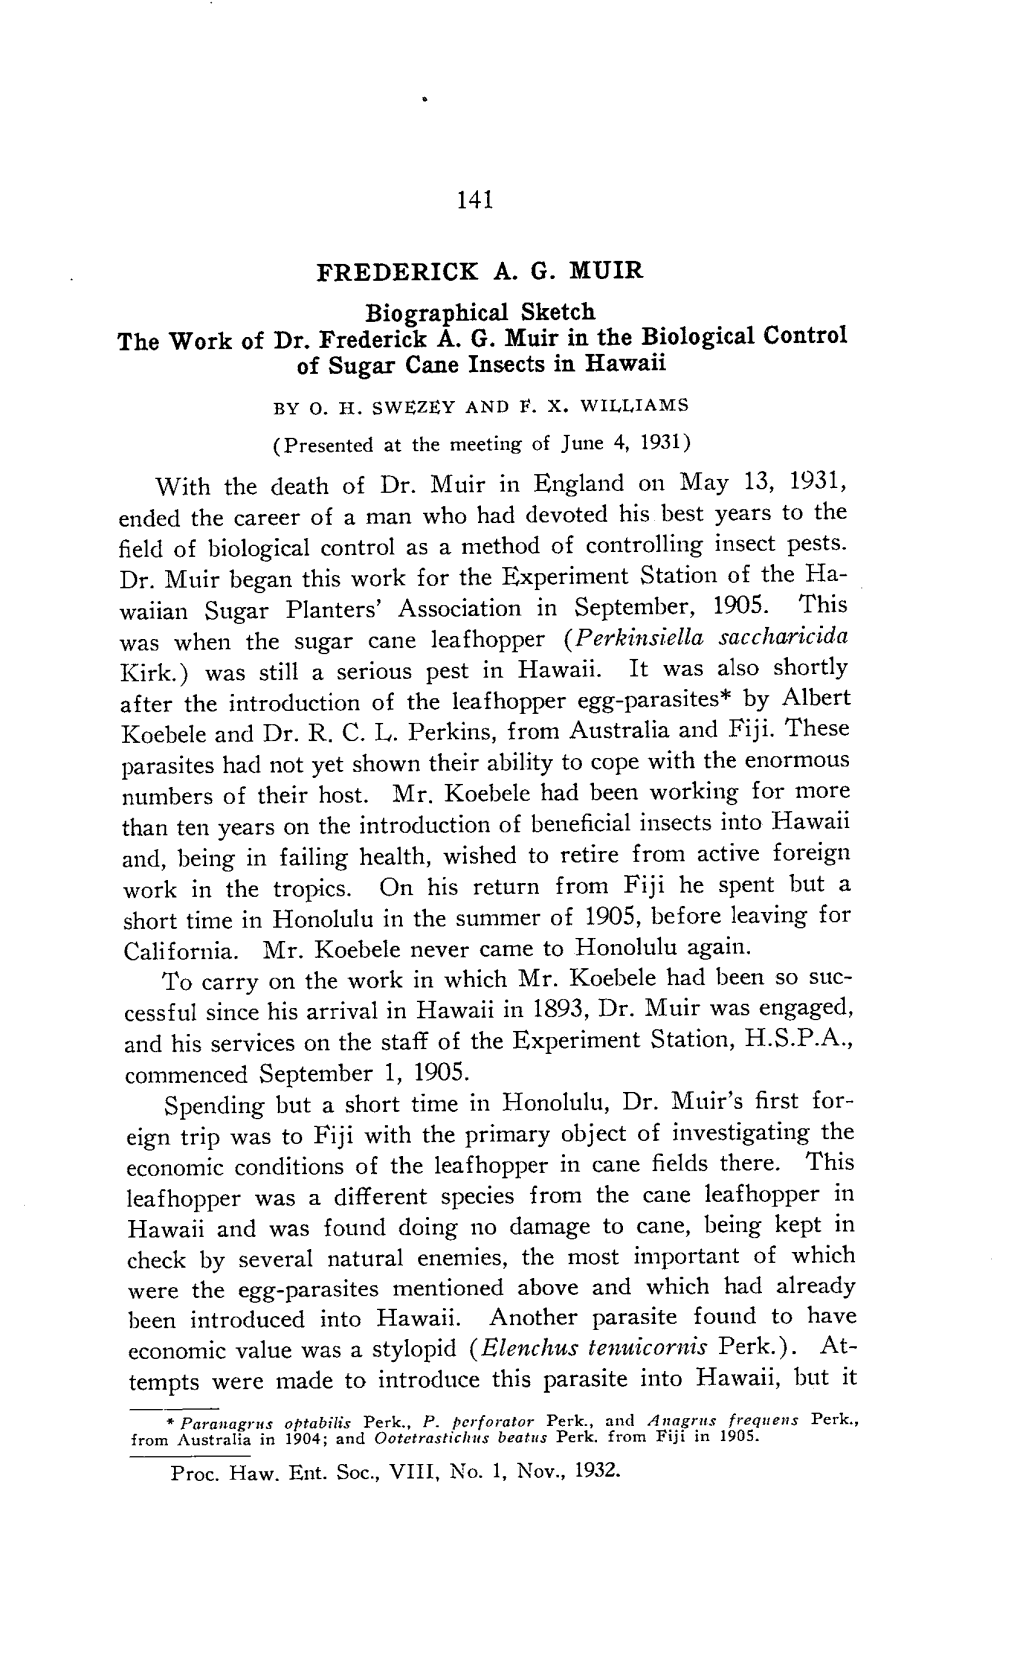 Waiian Sugar Planters' Association in September, 1905. This Koebele